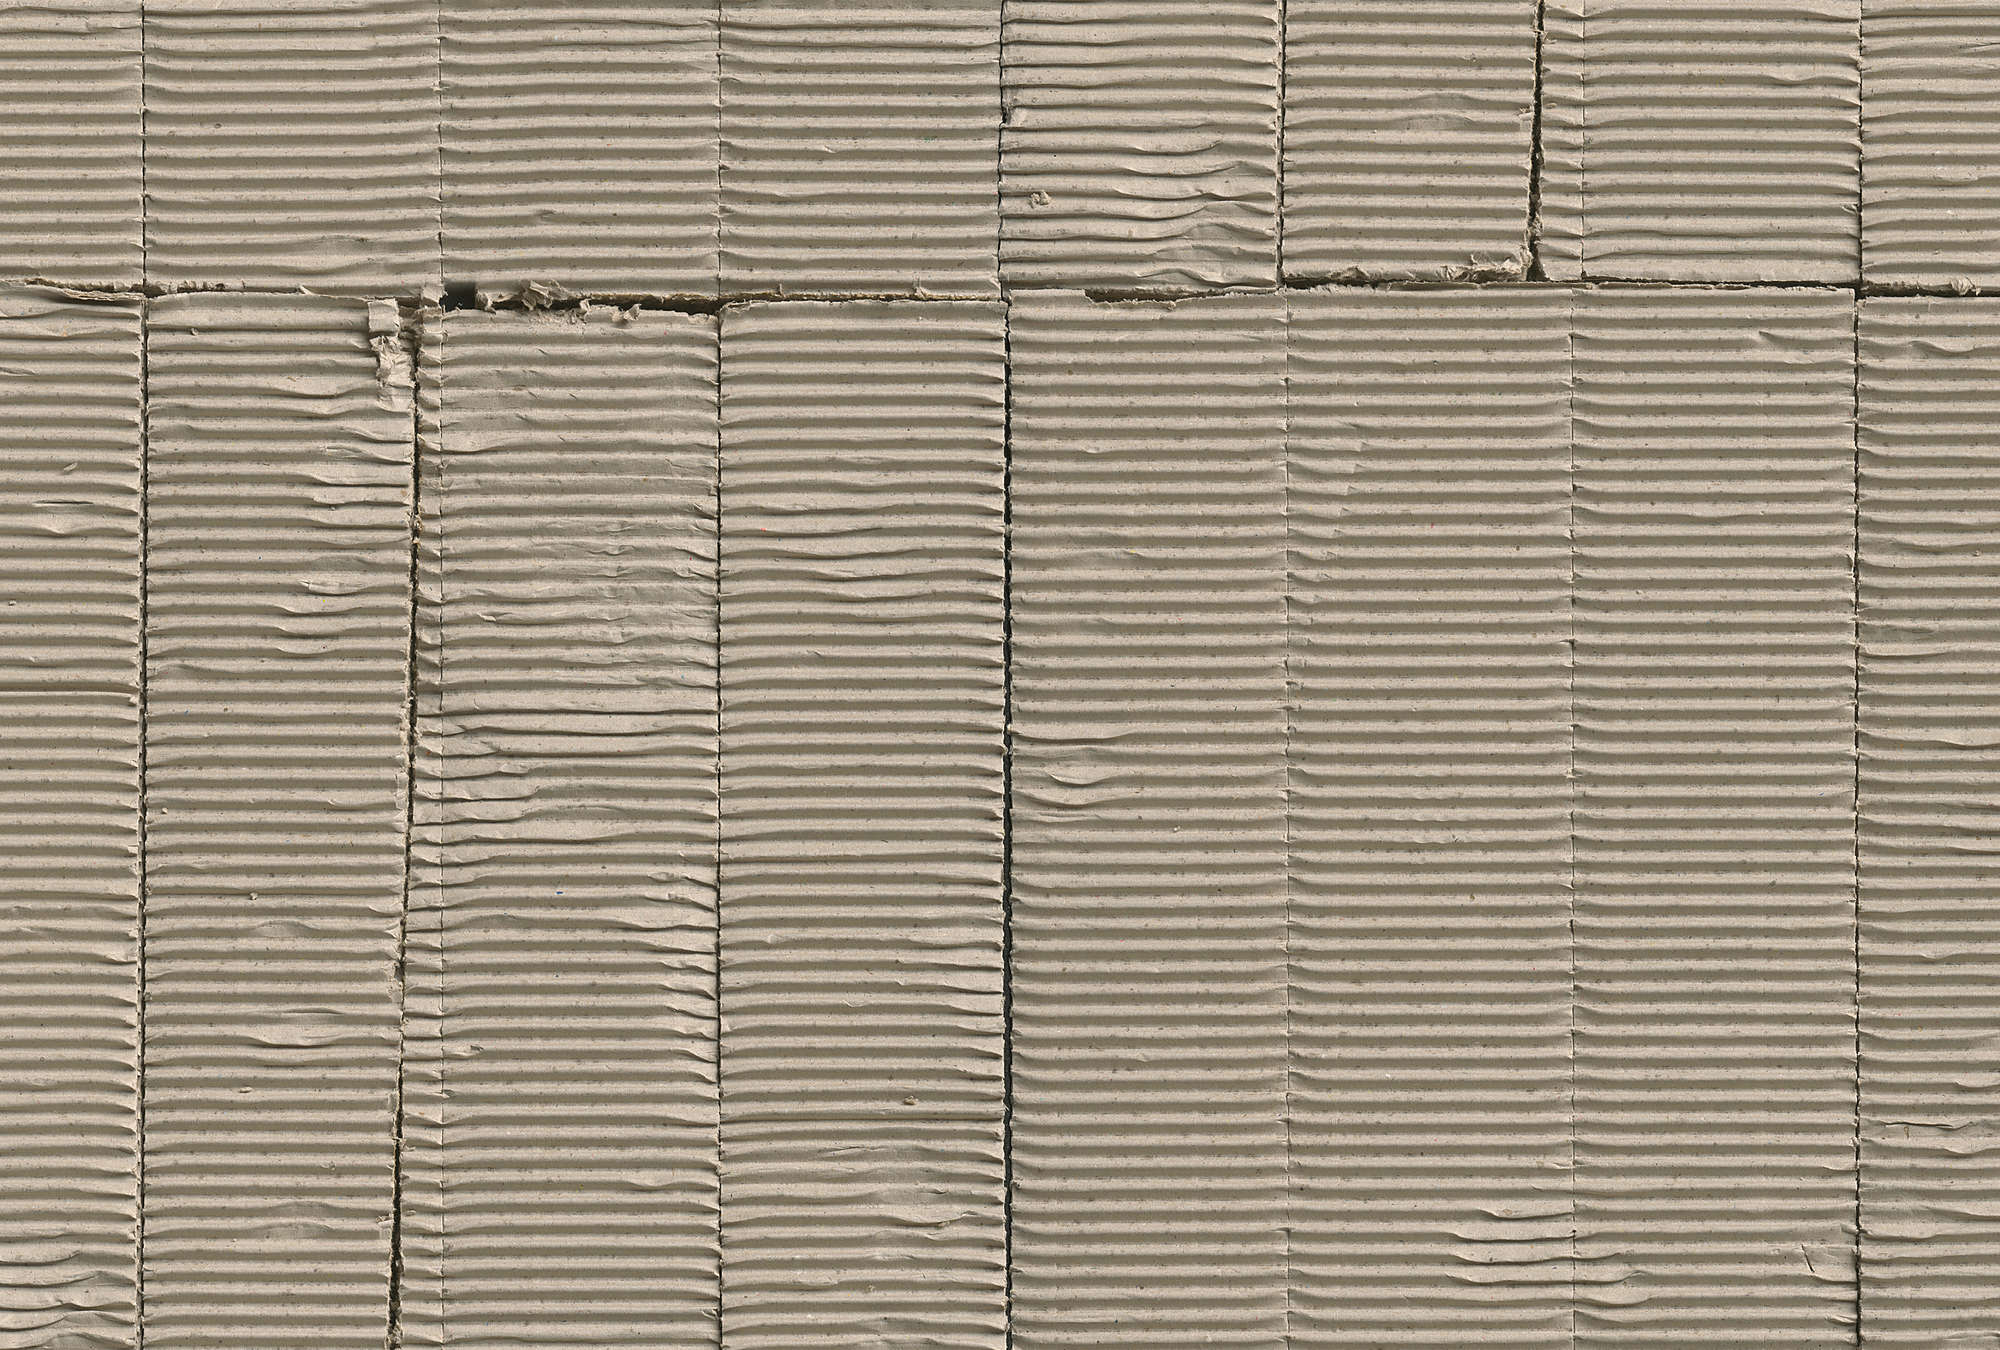             Photo wallpaper corrugated cardboard pattern in used look
        